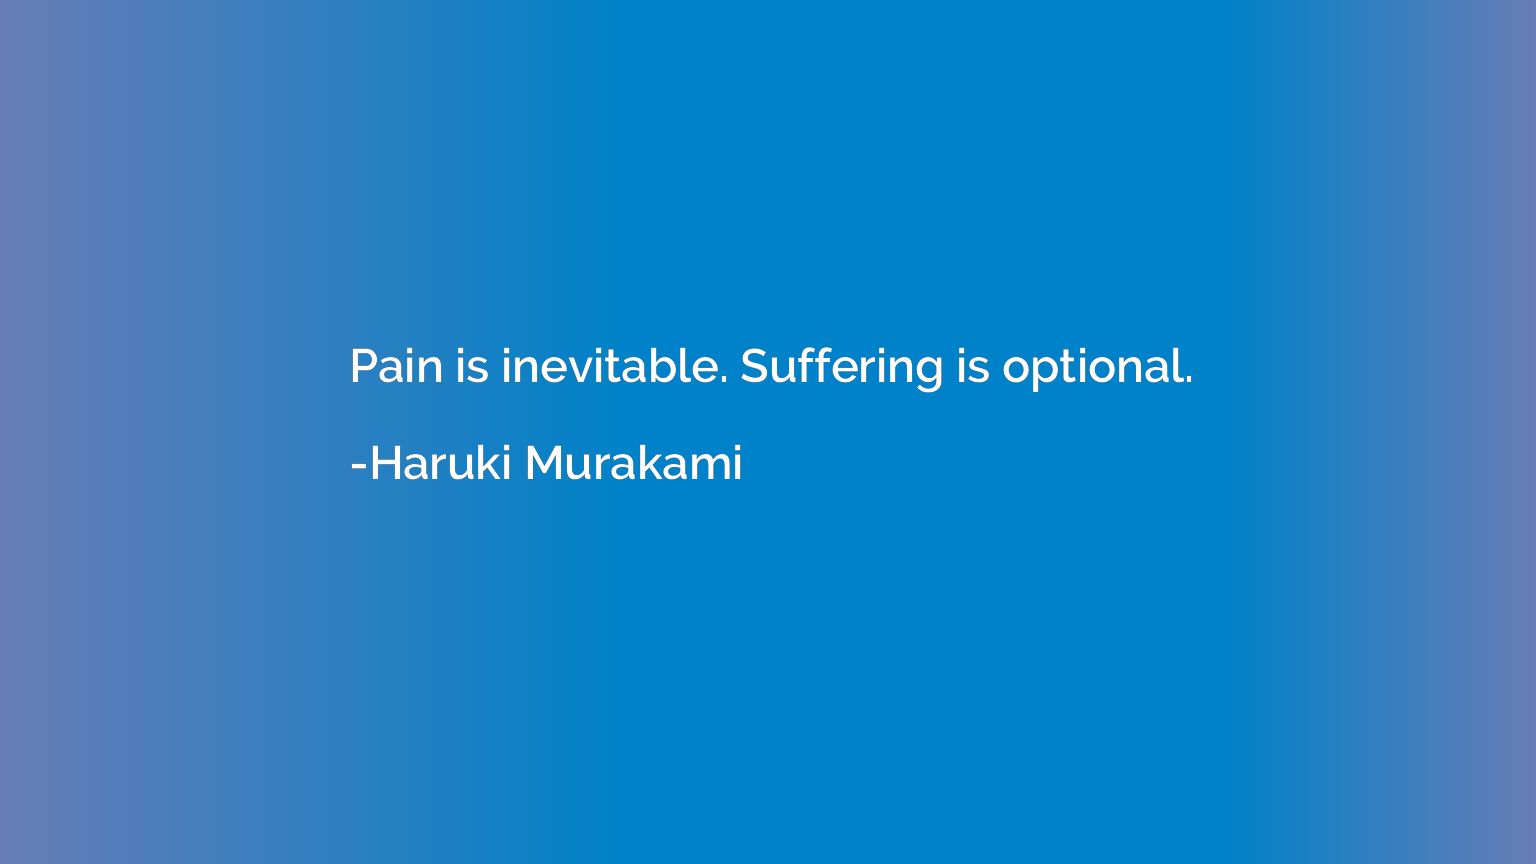 Pain is inevitable. Suffering is optional.